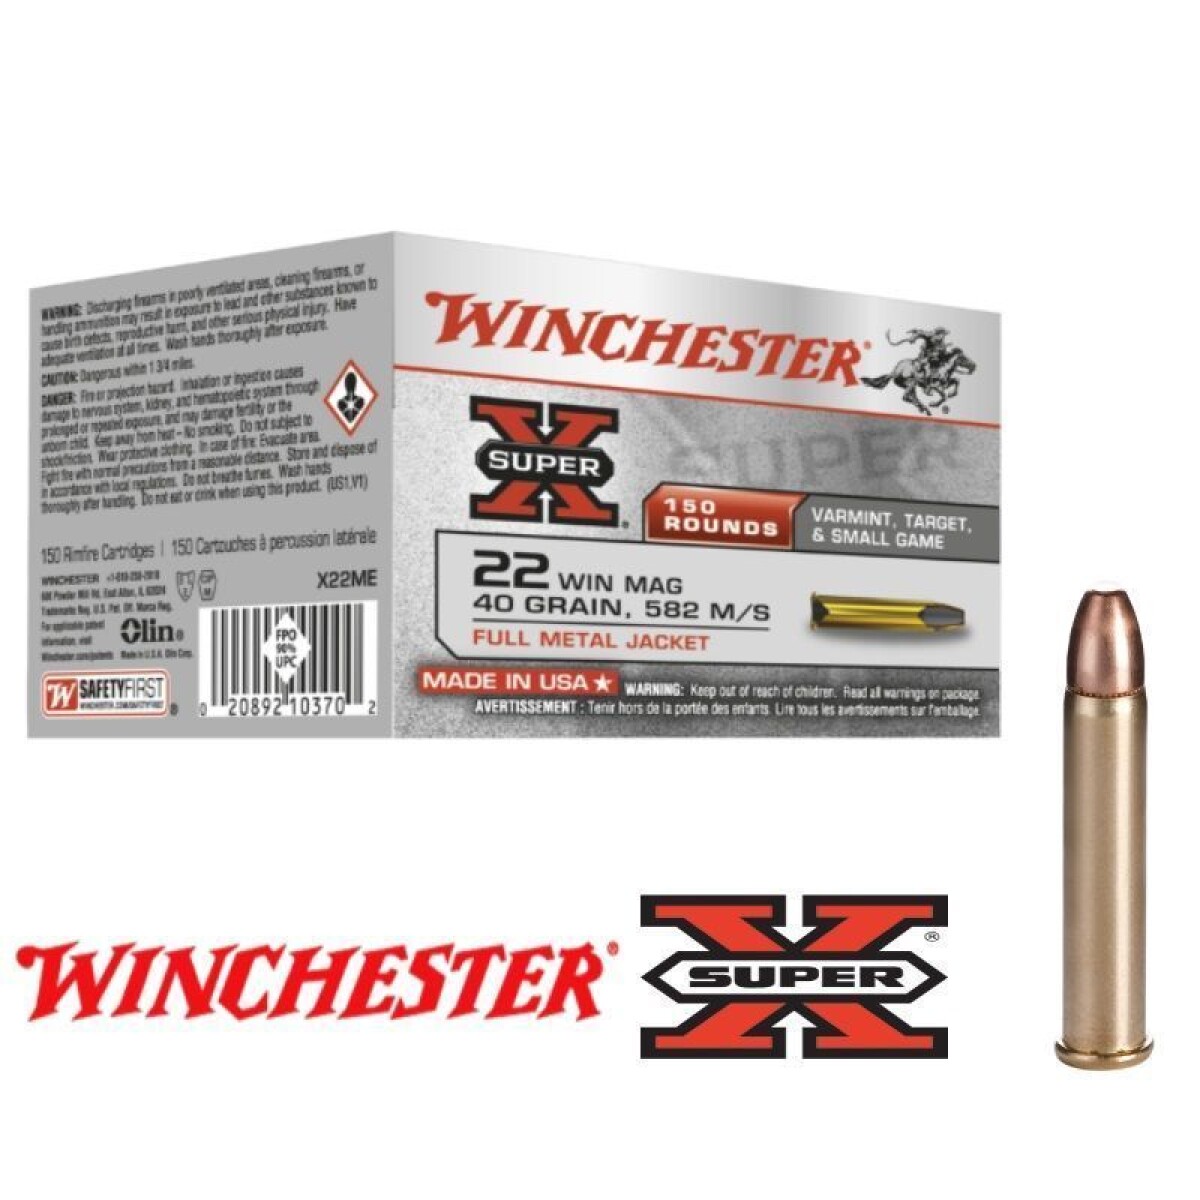 Bala Winchester Cal 22 Mag Fmj 40gr Win/ X22m 